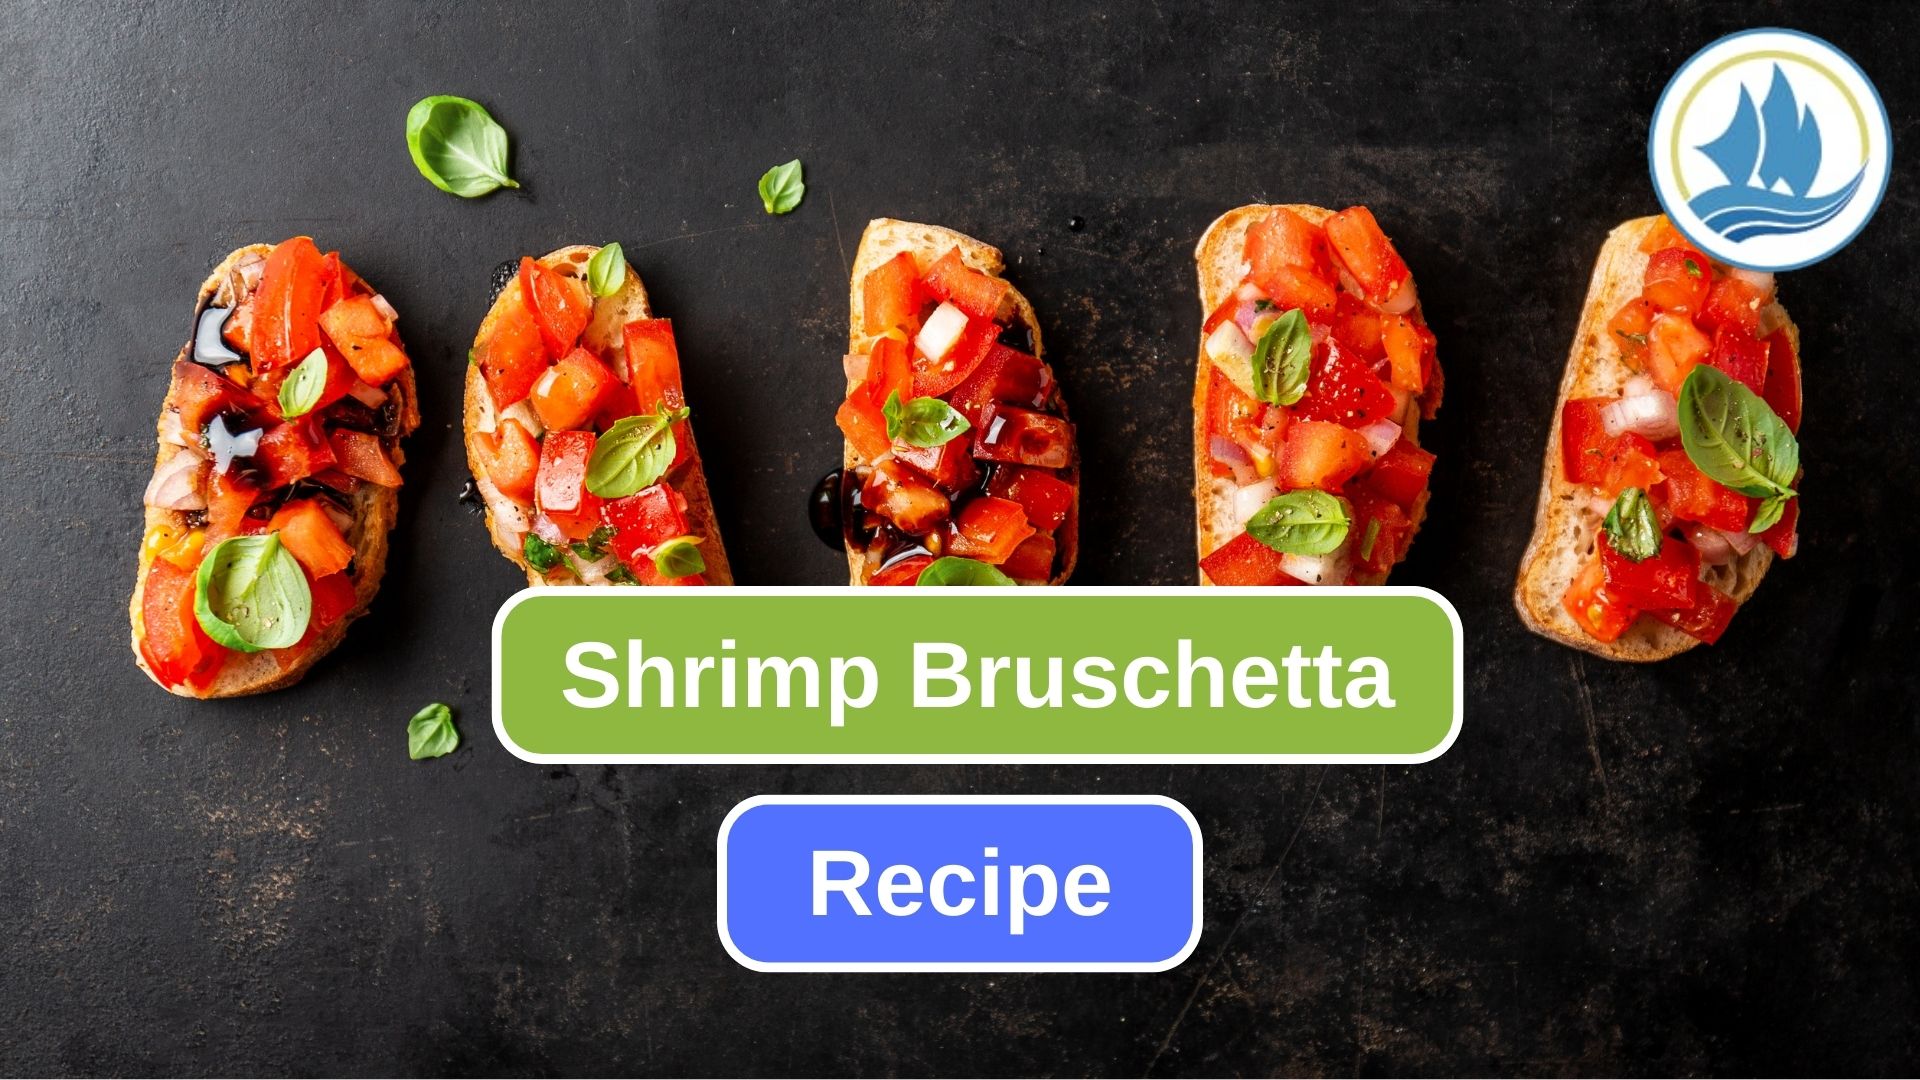 Try This Shrimp Bruschetta Recipe at Home